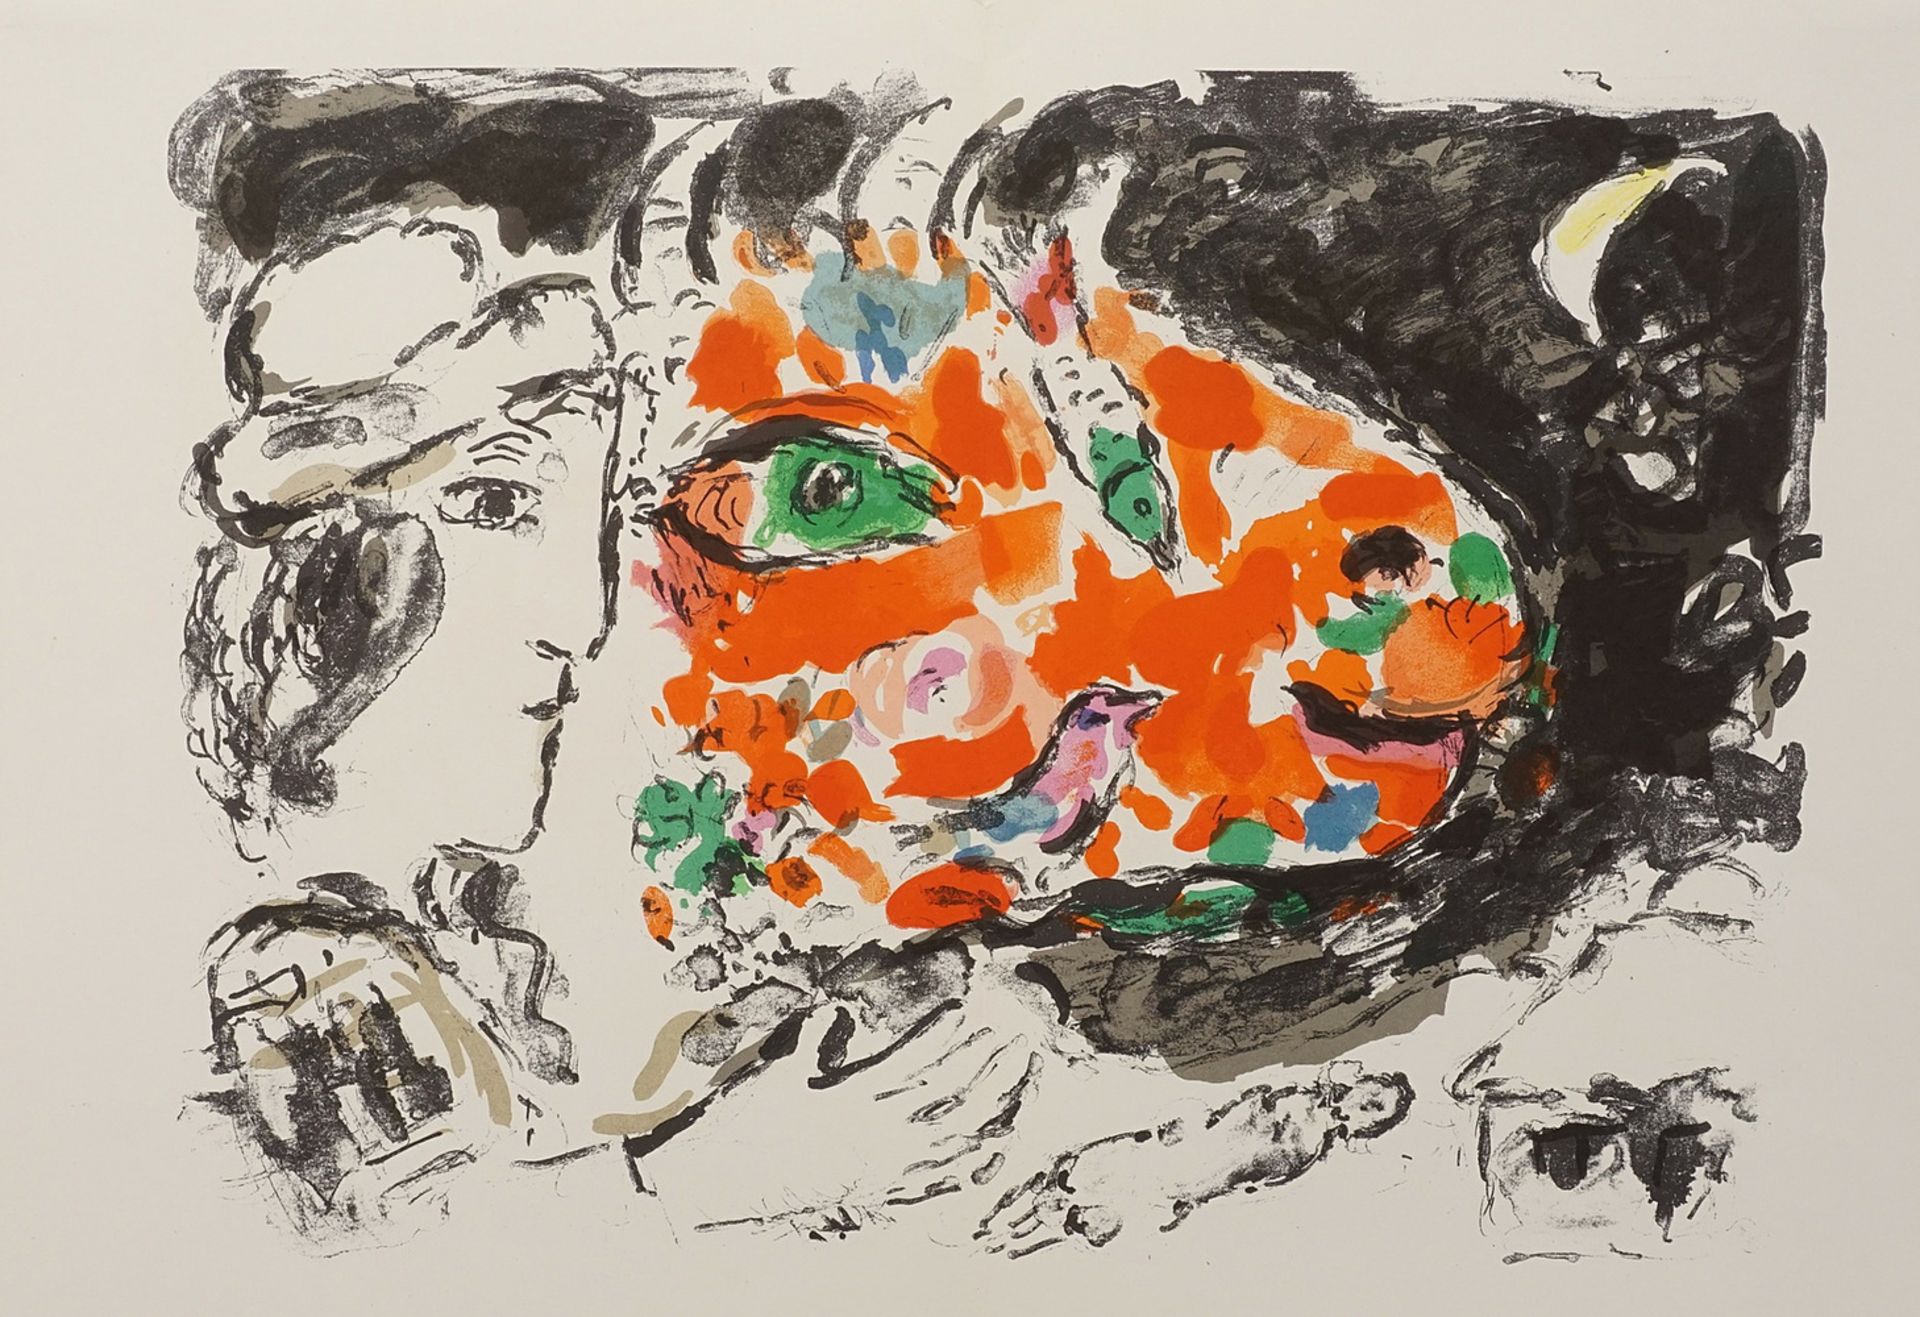 Marc Chagall (1887-1985), "Après l'hiver" (After Winter)